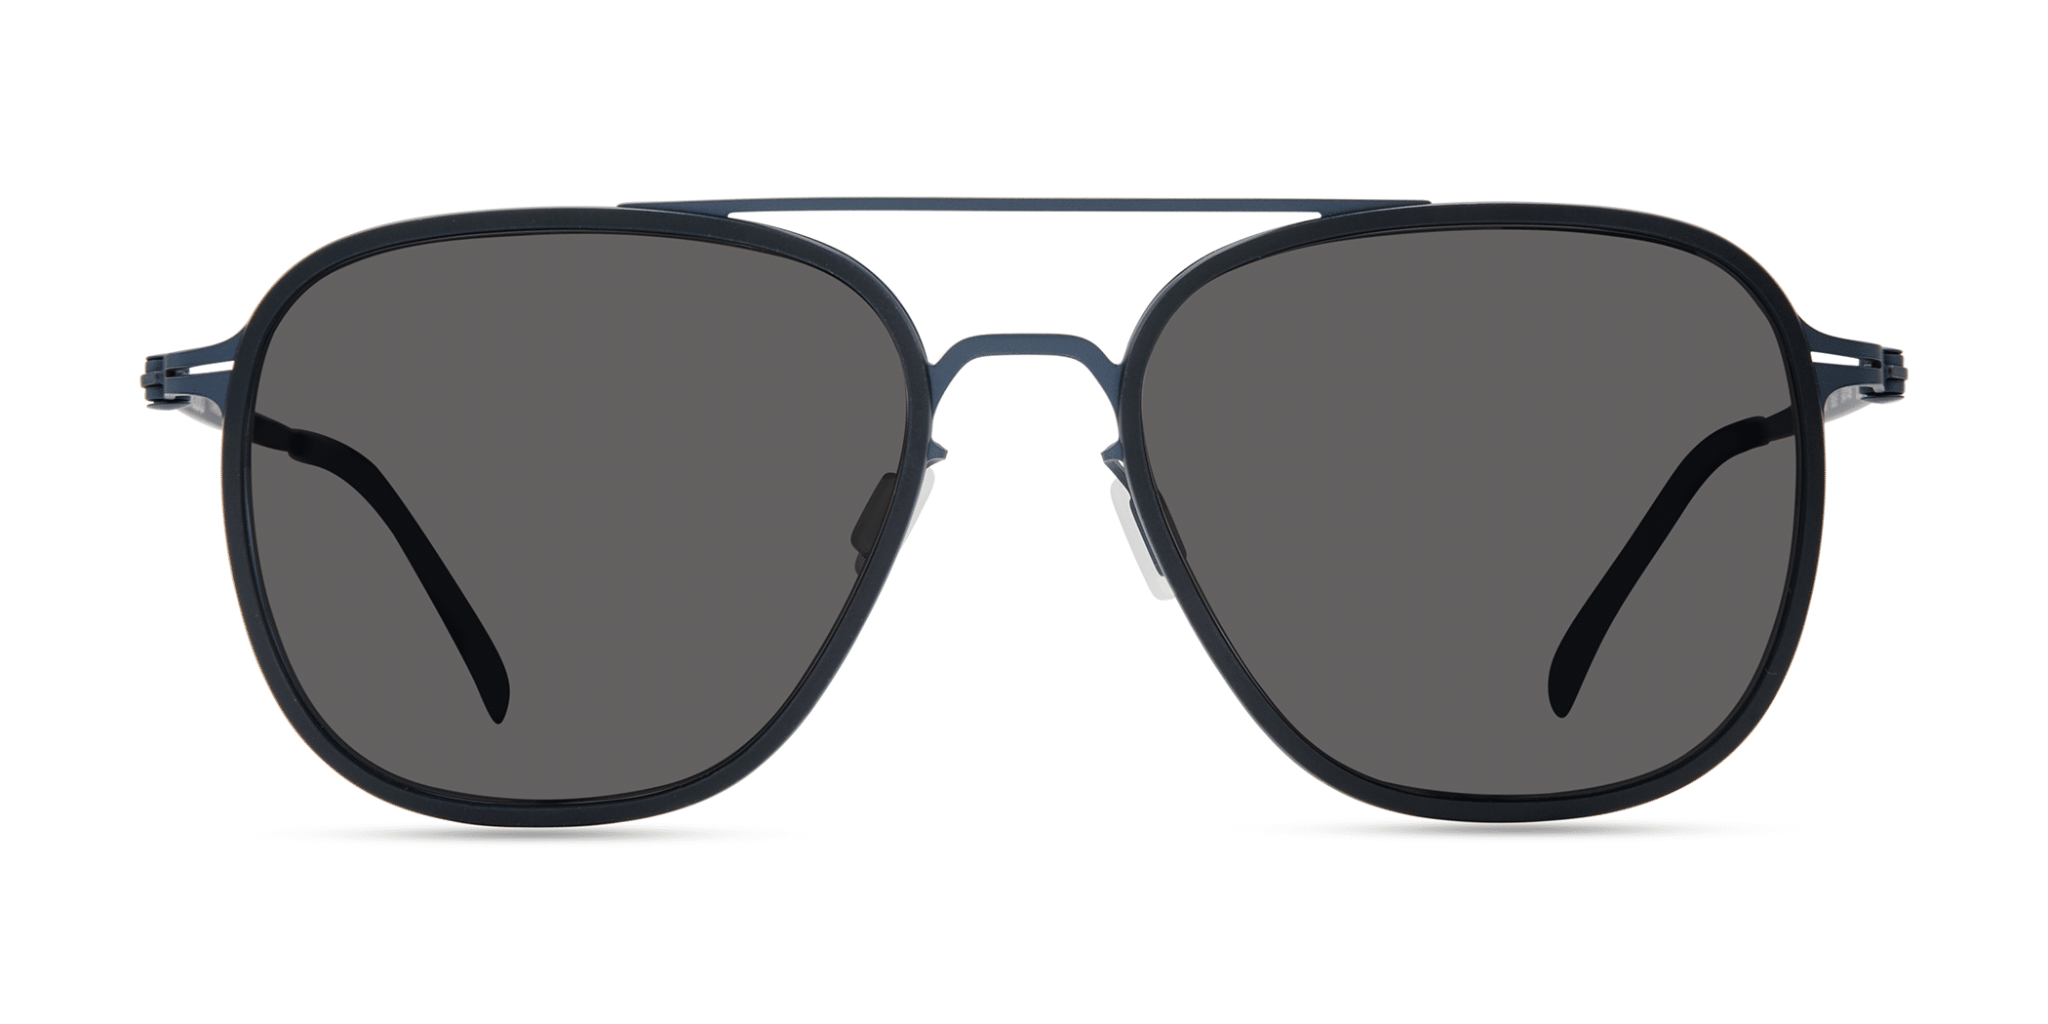  Modo 690 blue titanium polarized sunglasses 